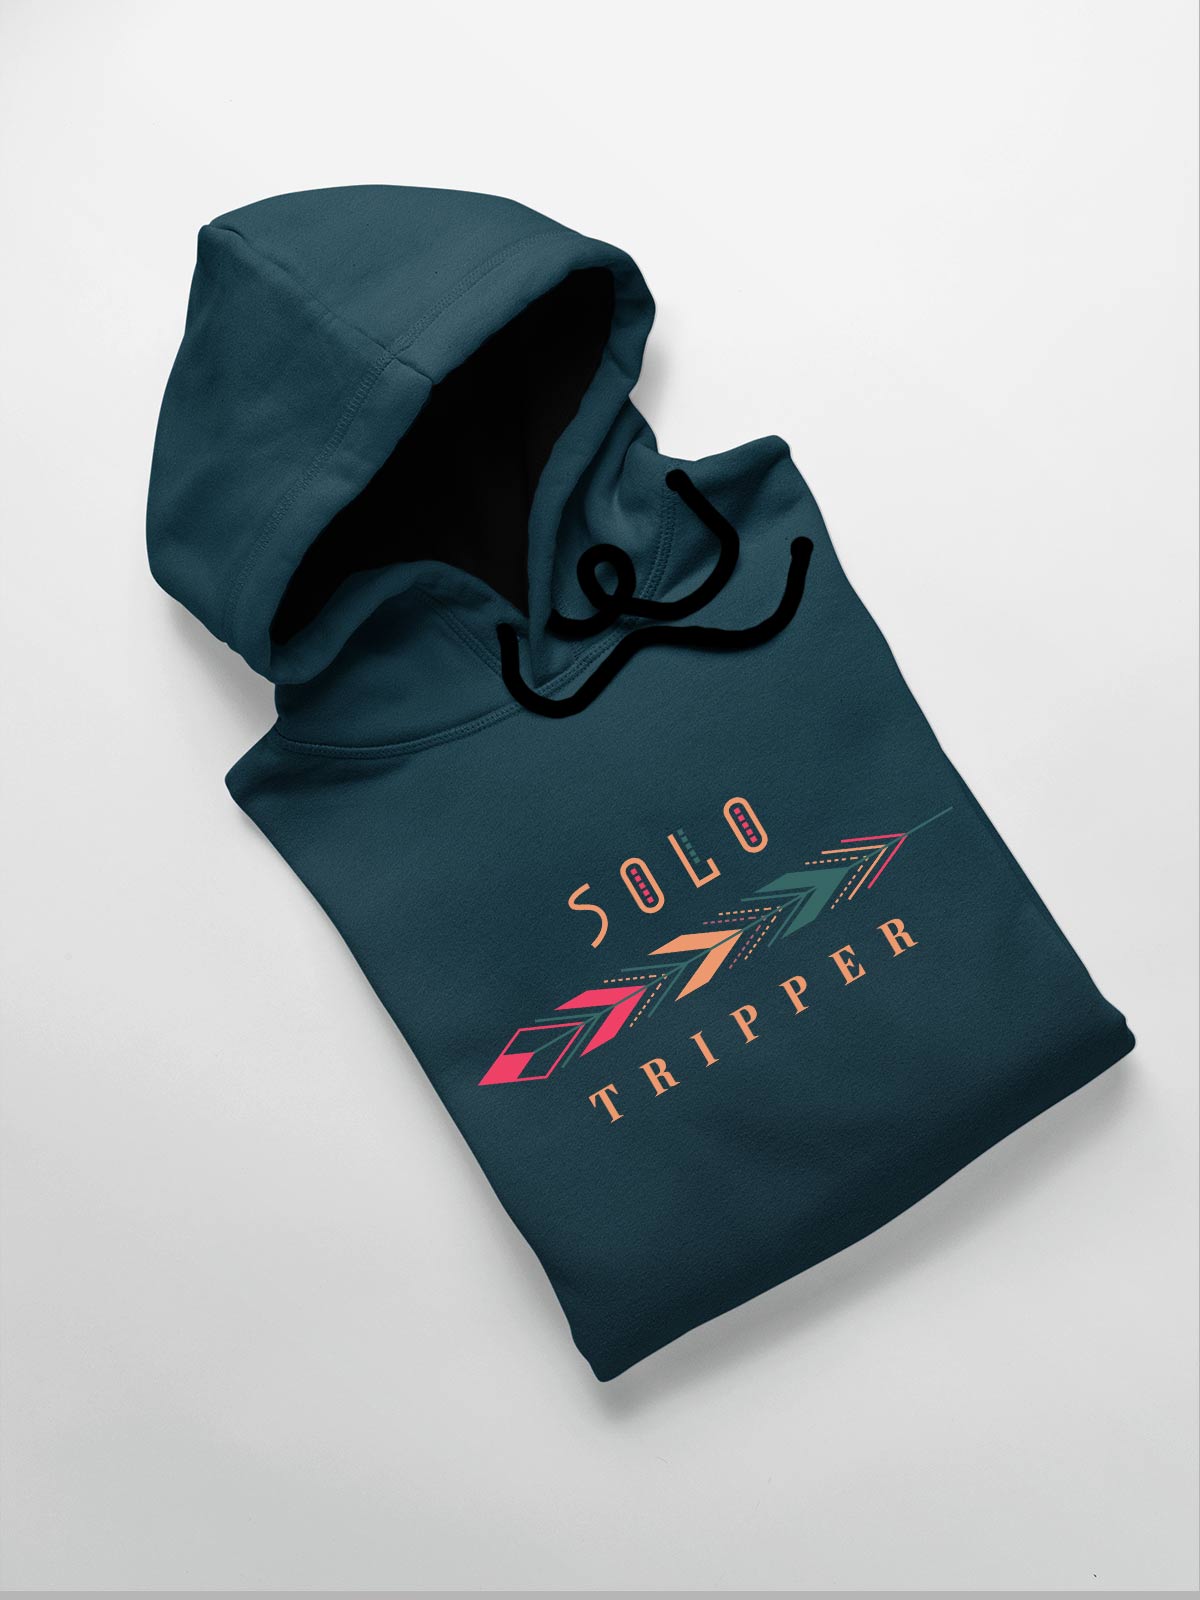  Solo Tripper Printed Cotton Hoodie for men & women by shopghumakkad